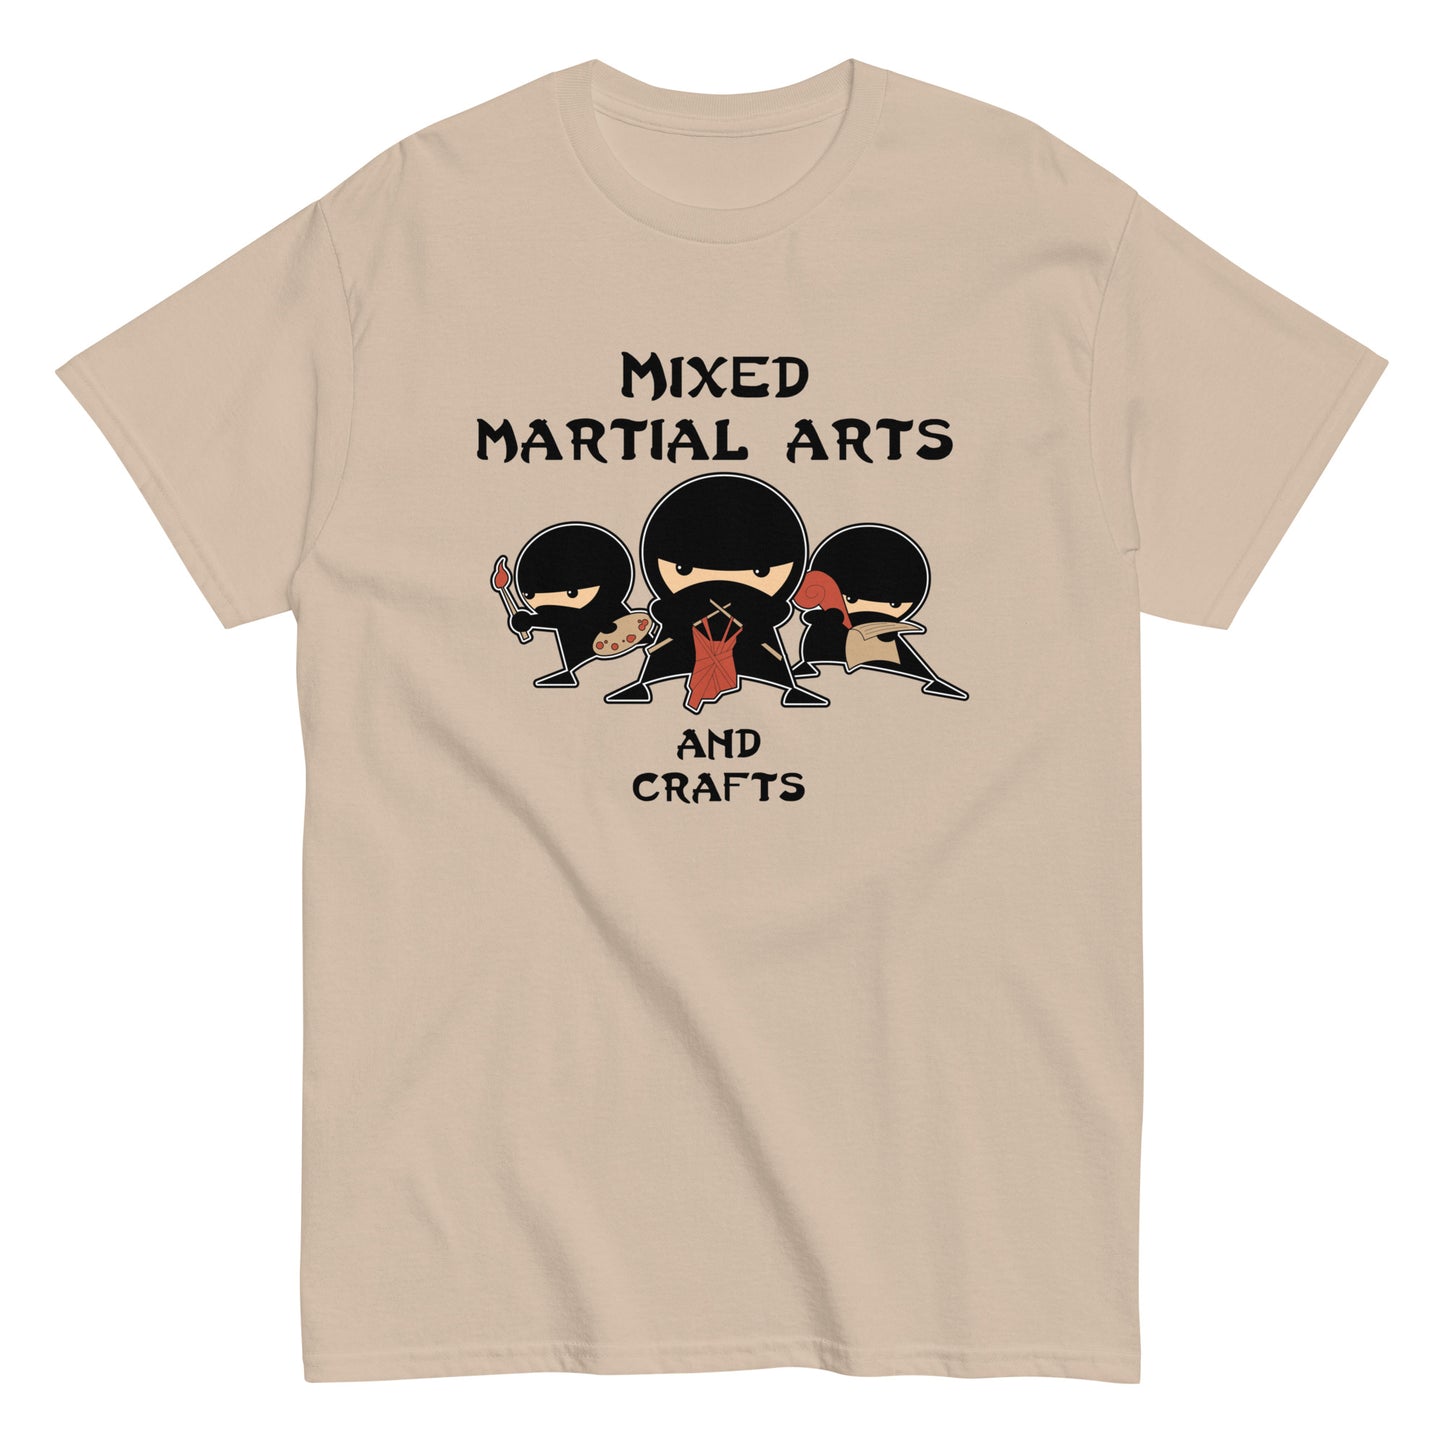 Mixed Martial Arts and Crafts Men's Classic Tee